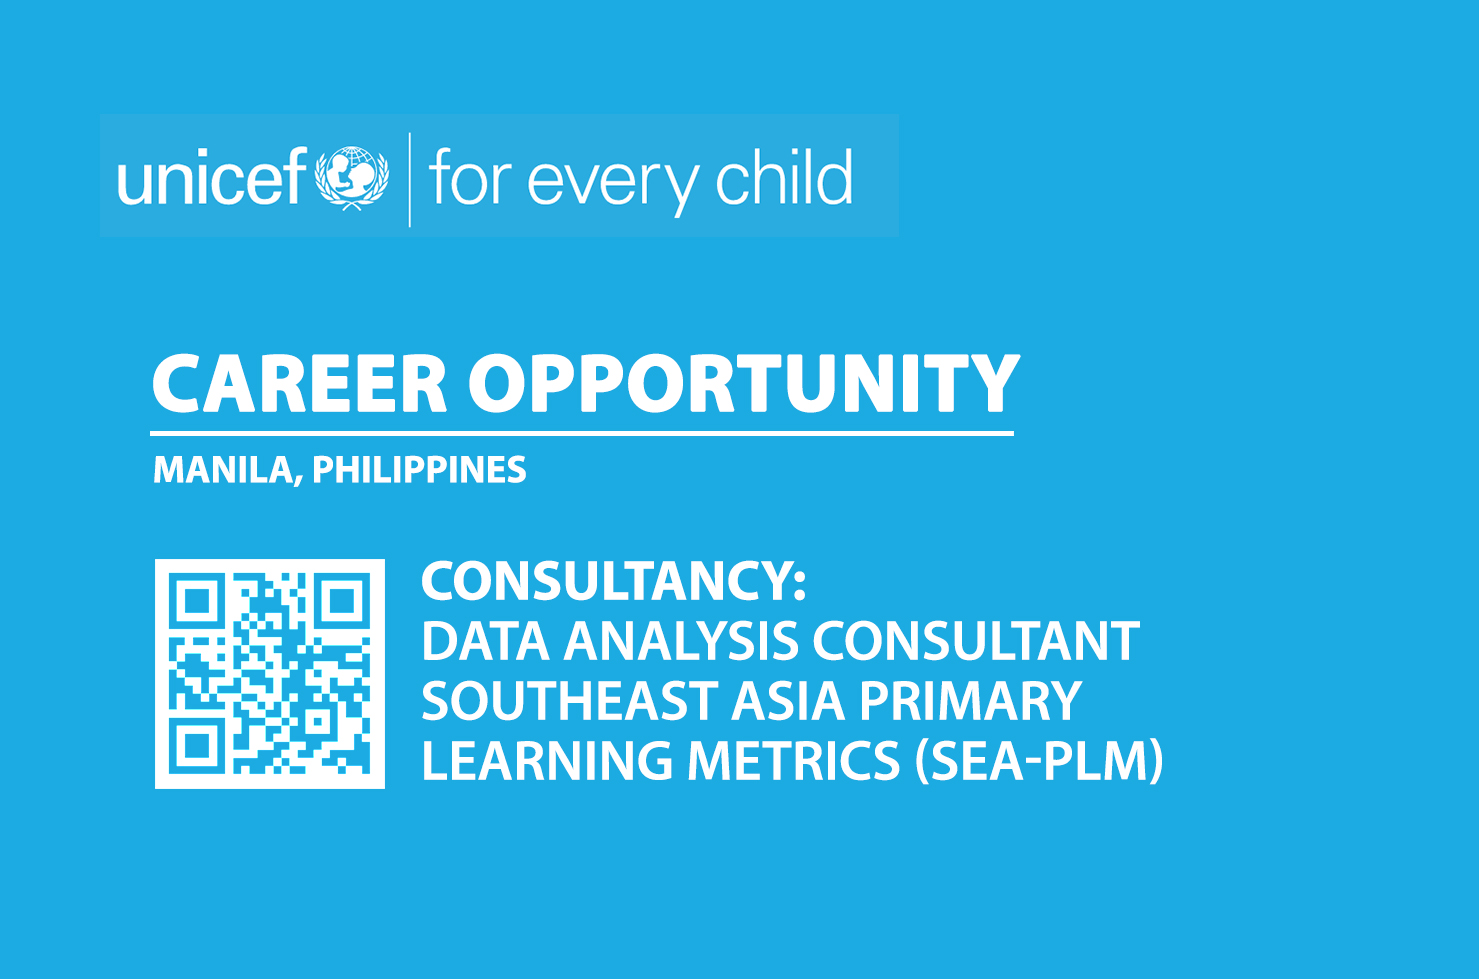 Consultancy: Data Analysis Consultant Southeast Asia Primary Learning Metrics (SEA-PLM), Manila, Philippines